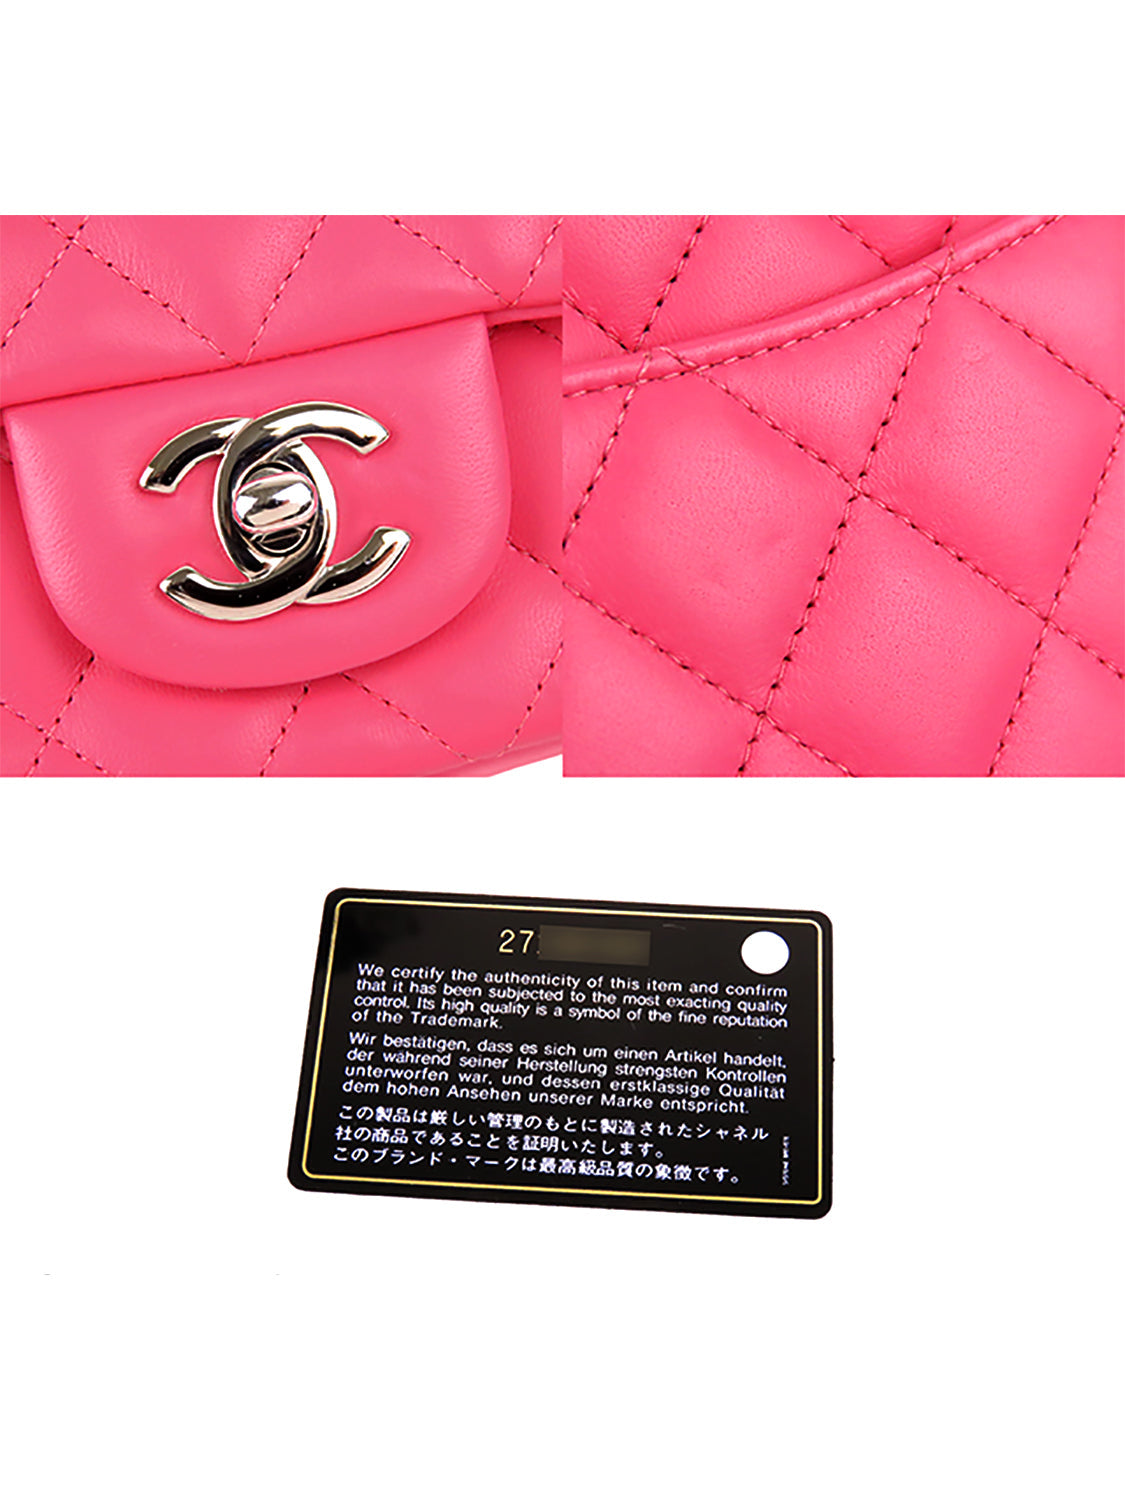 1,375 Chanel Bag Stock Photos - Free & Royalty-Free Stock Photos